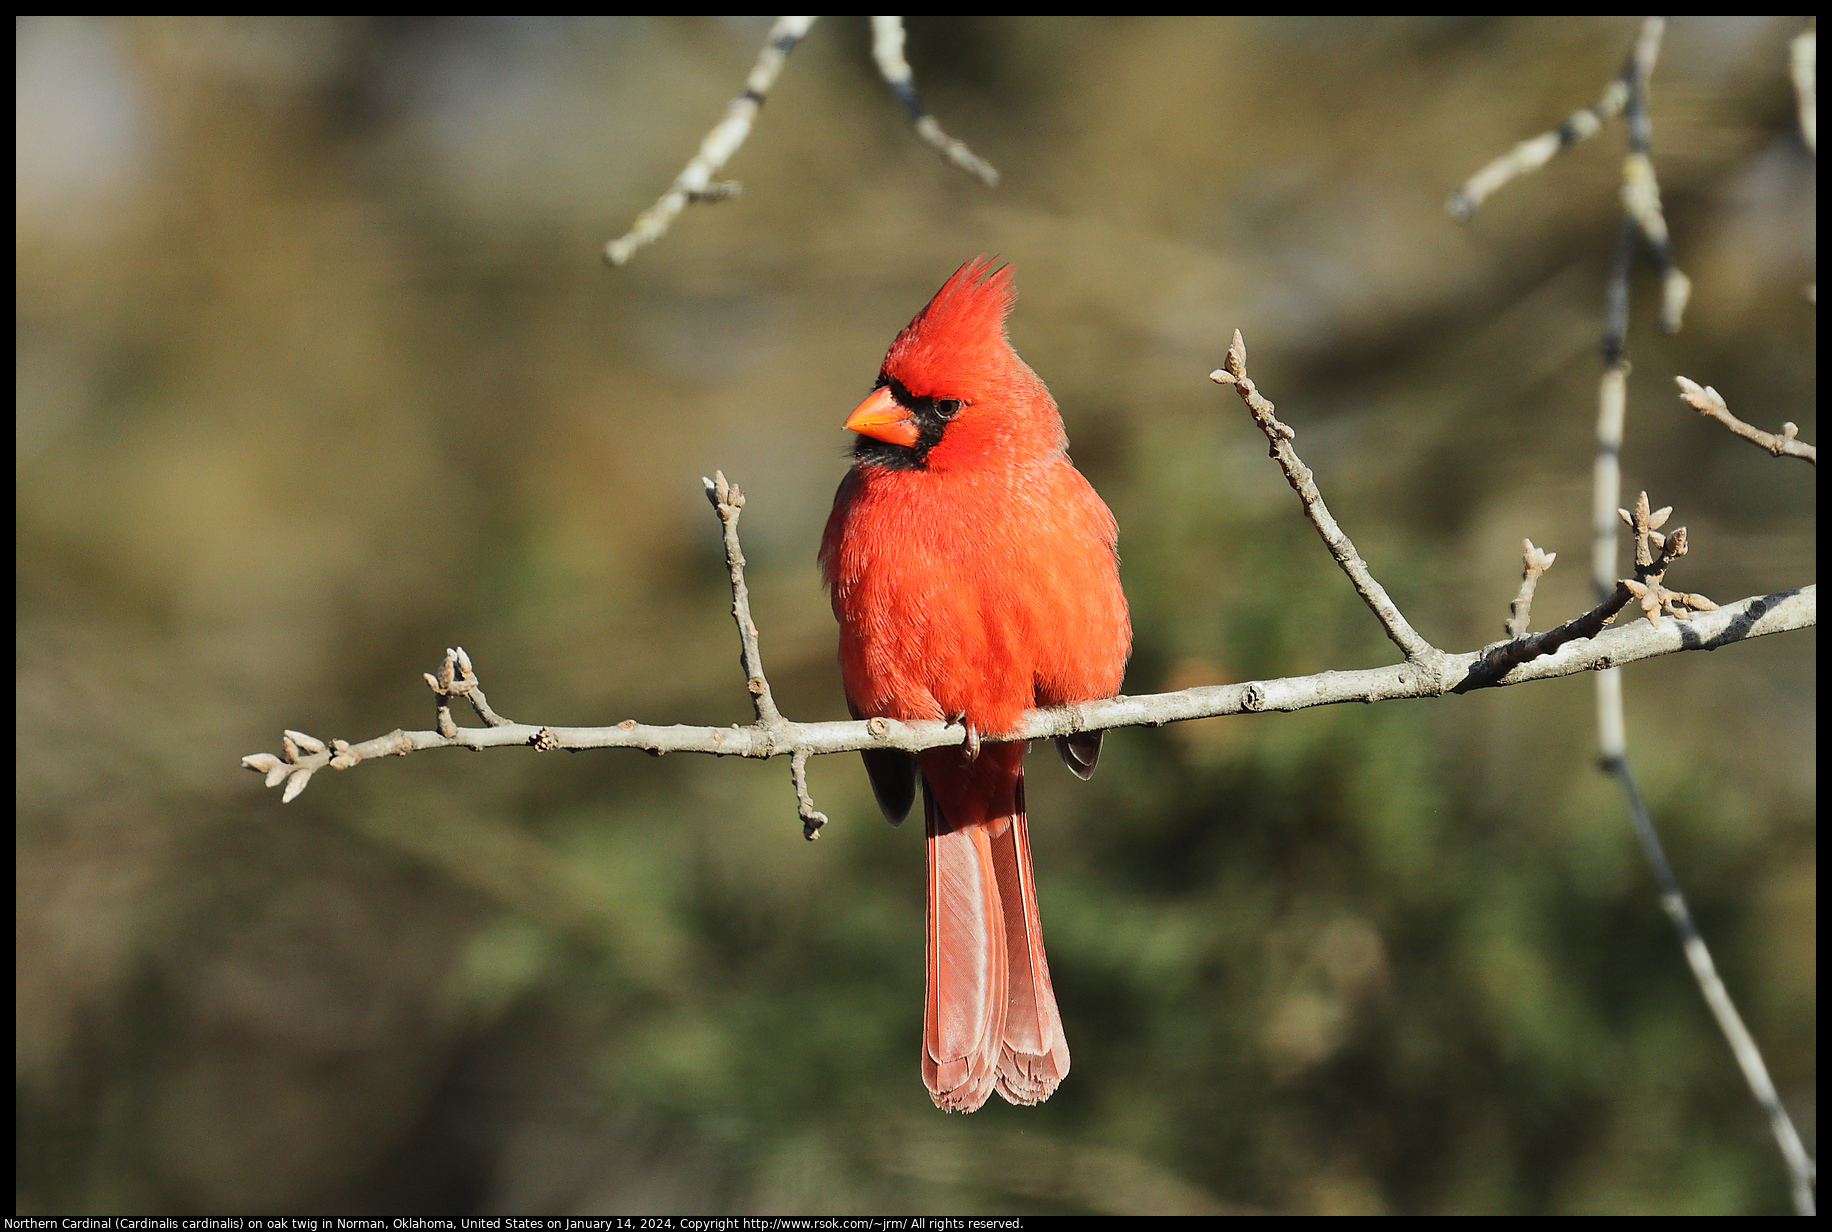 Northern Cardinal (Cardinalis cardinalis) on oak twig in Norman, Oklahoma, United States on January 14, 2024